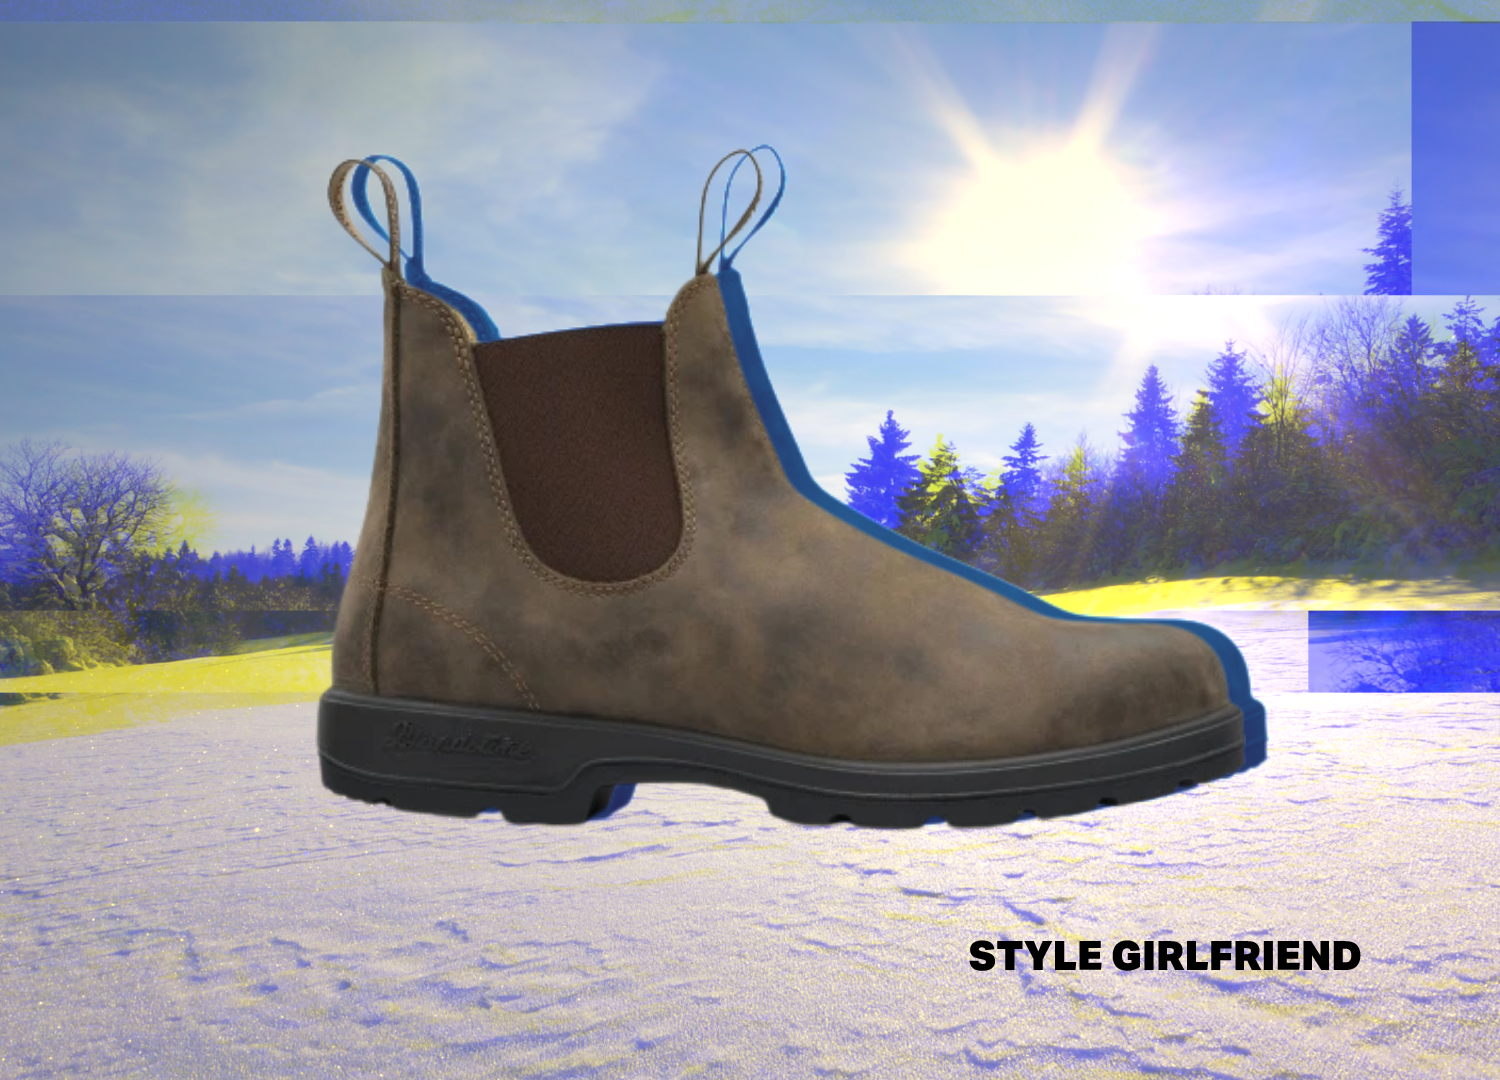 Blundstone winter boots